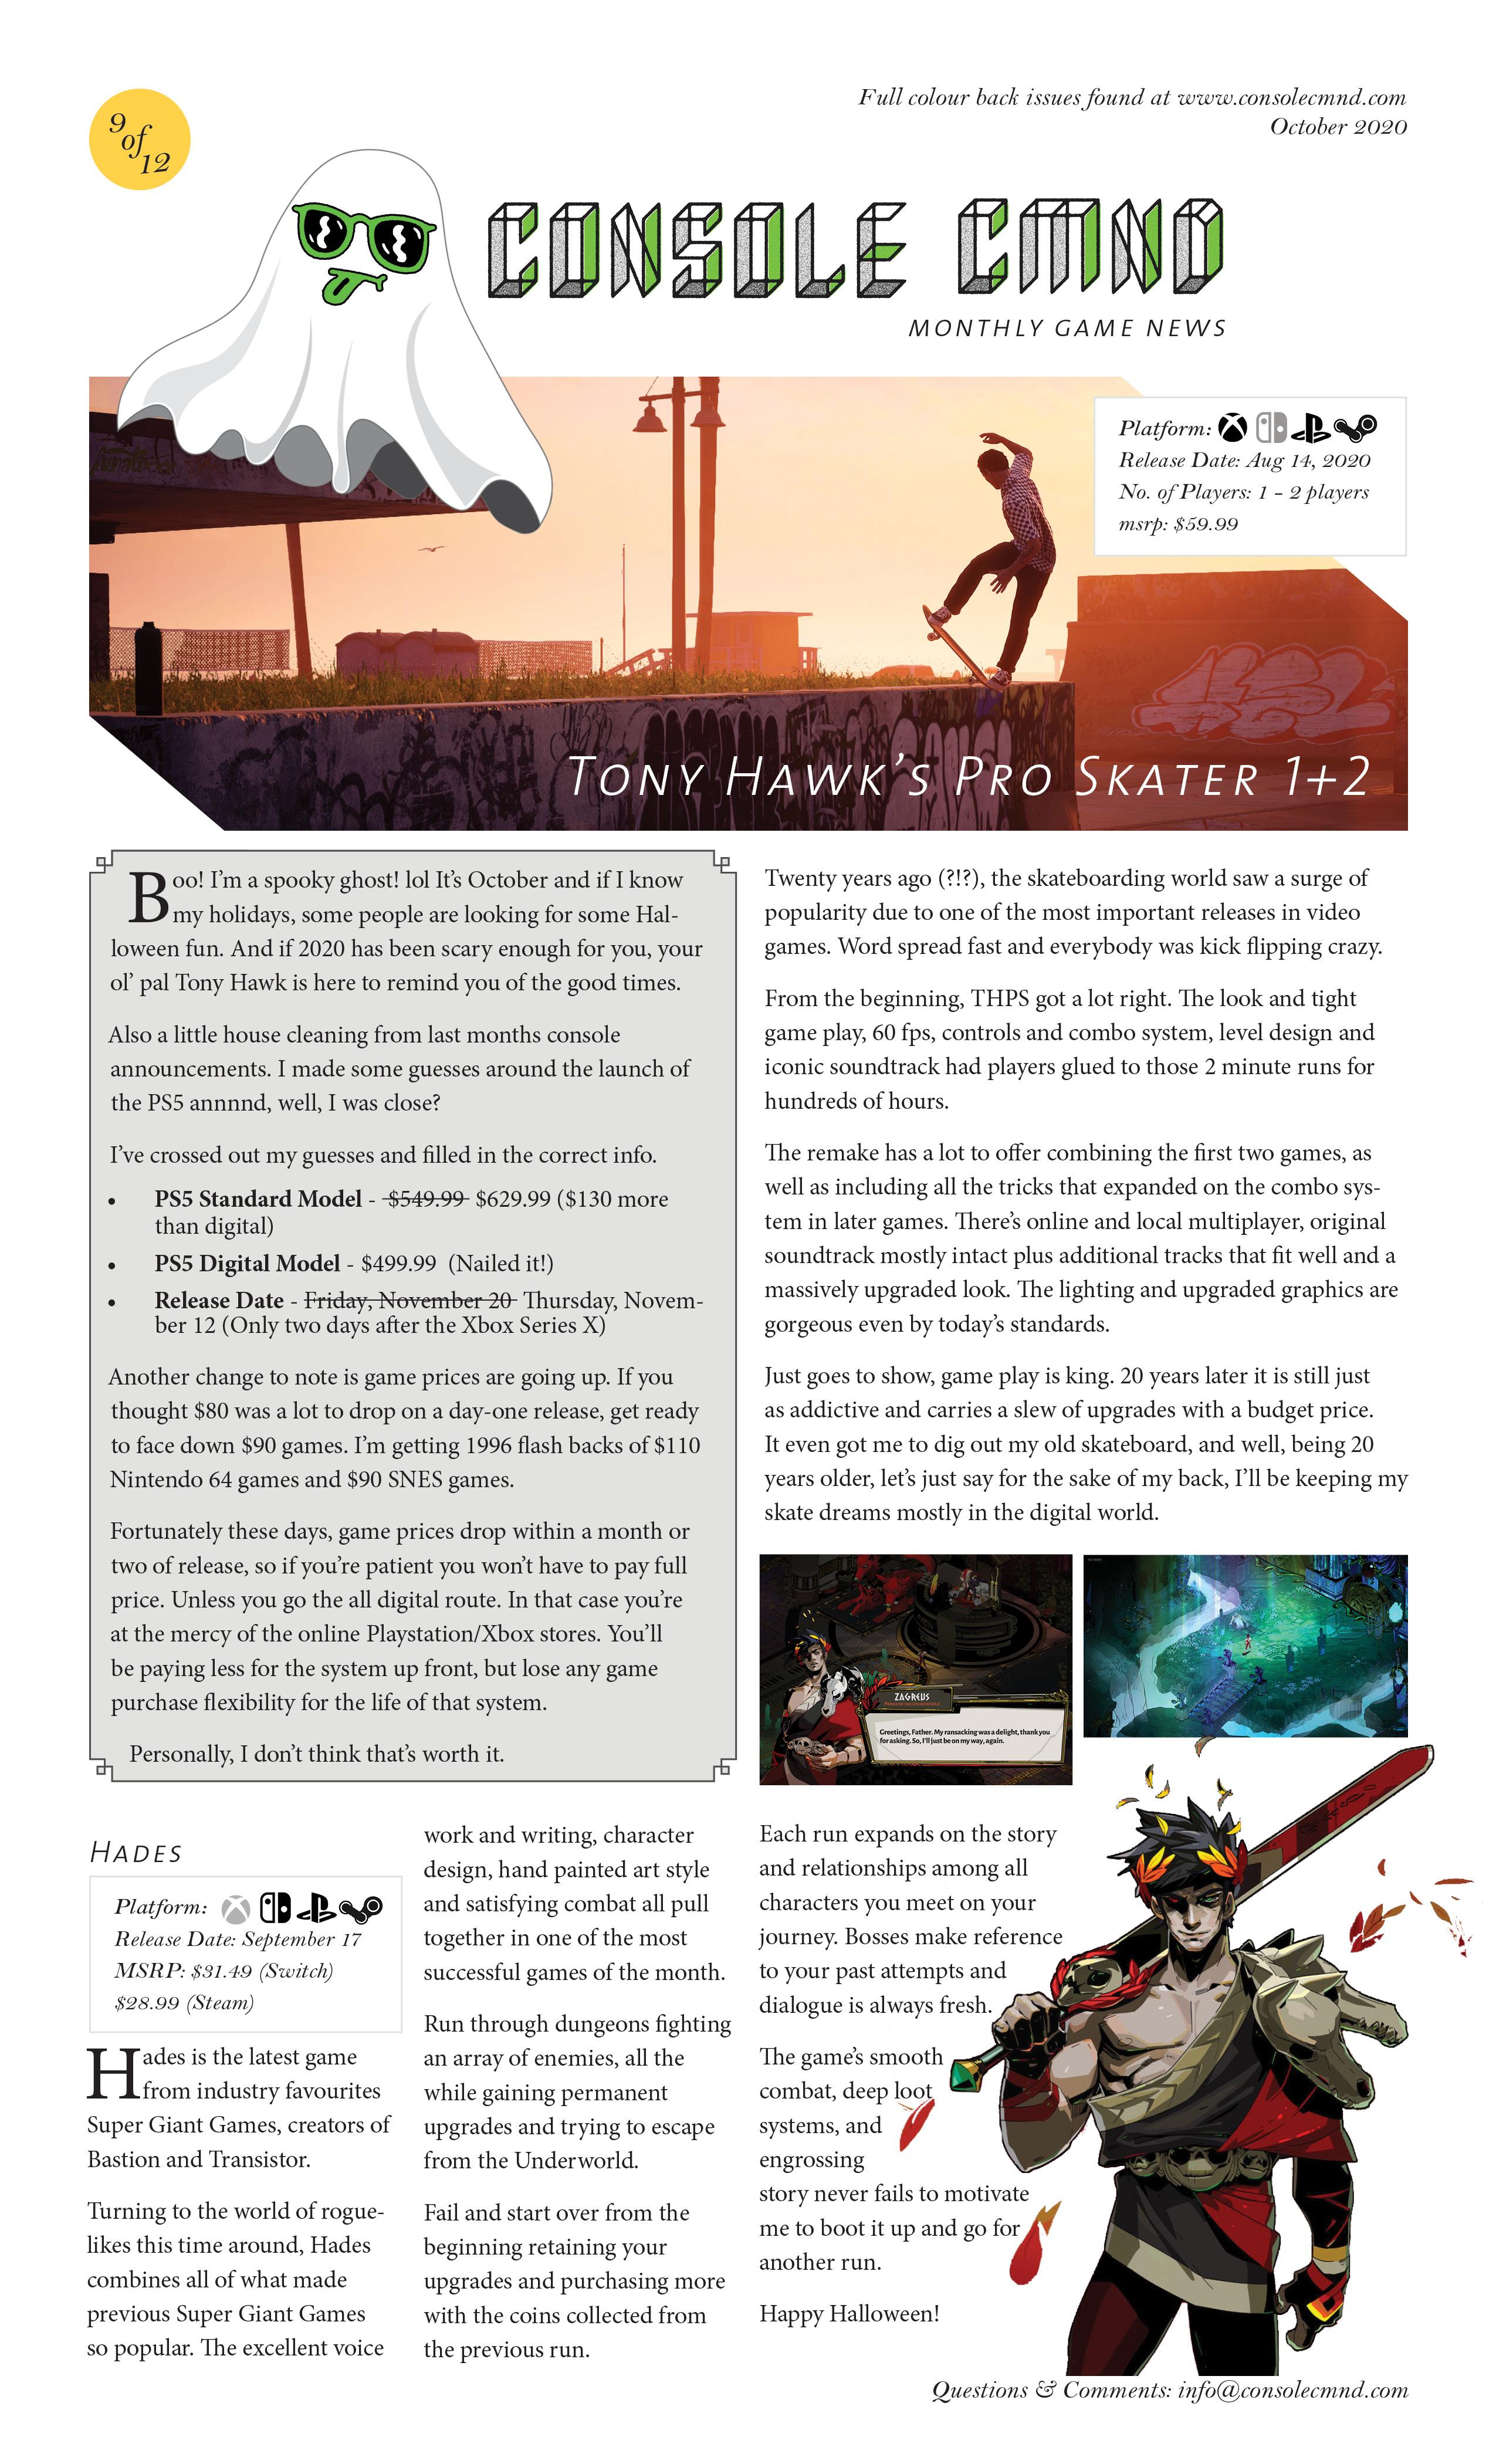 October 2020 - Tony Hawk Pro Skater 1+2, Hades